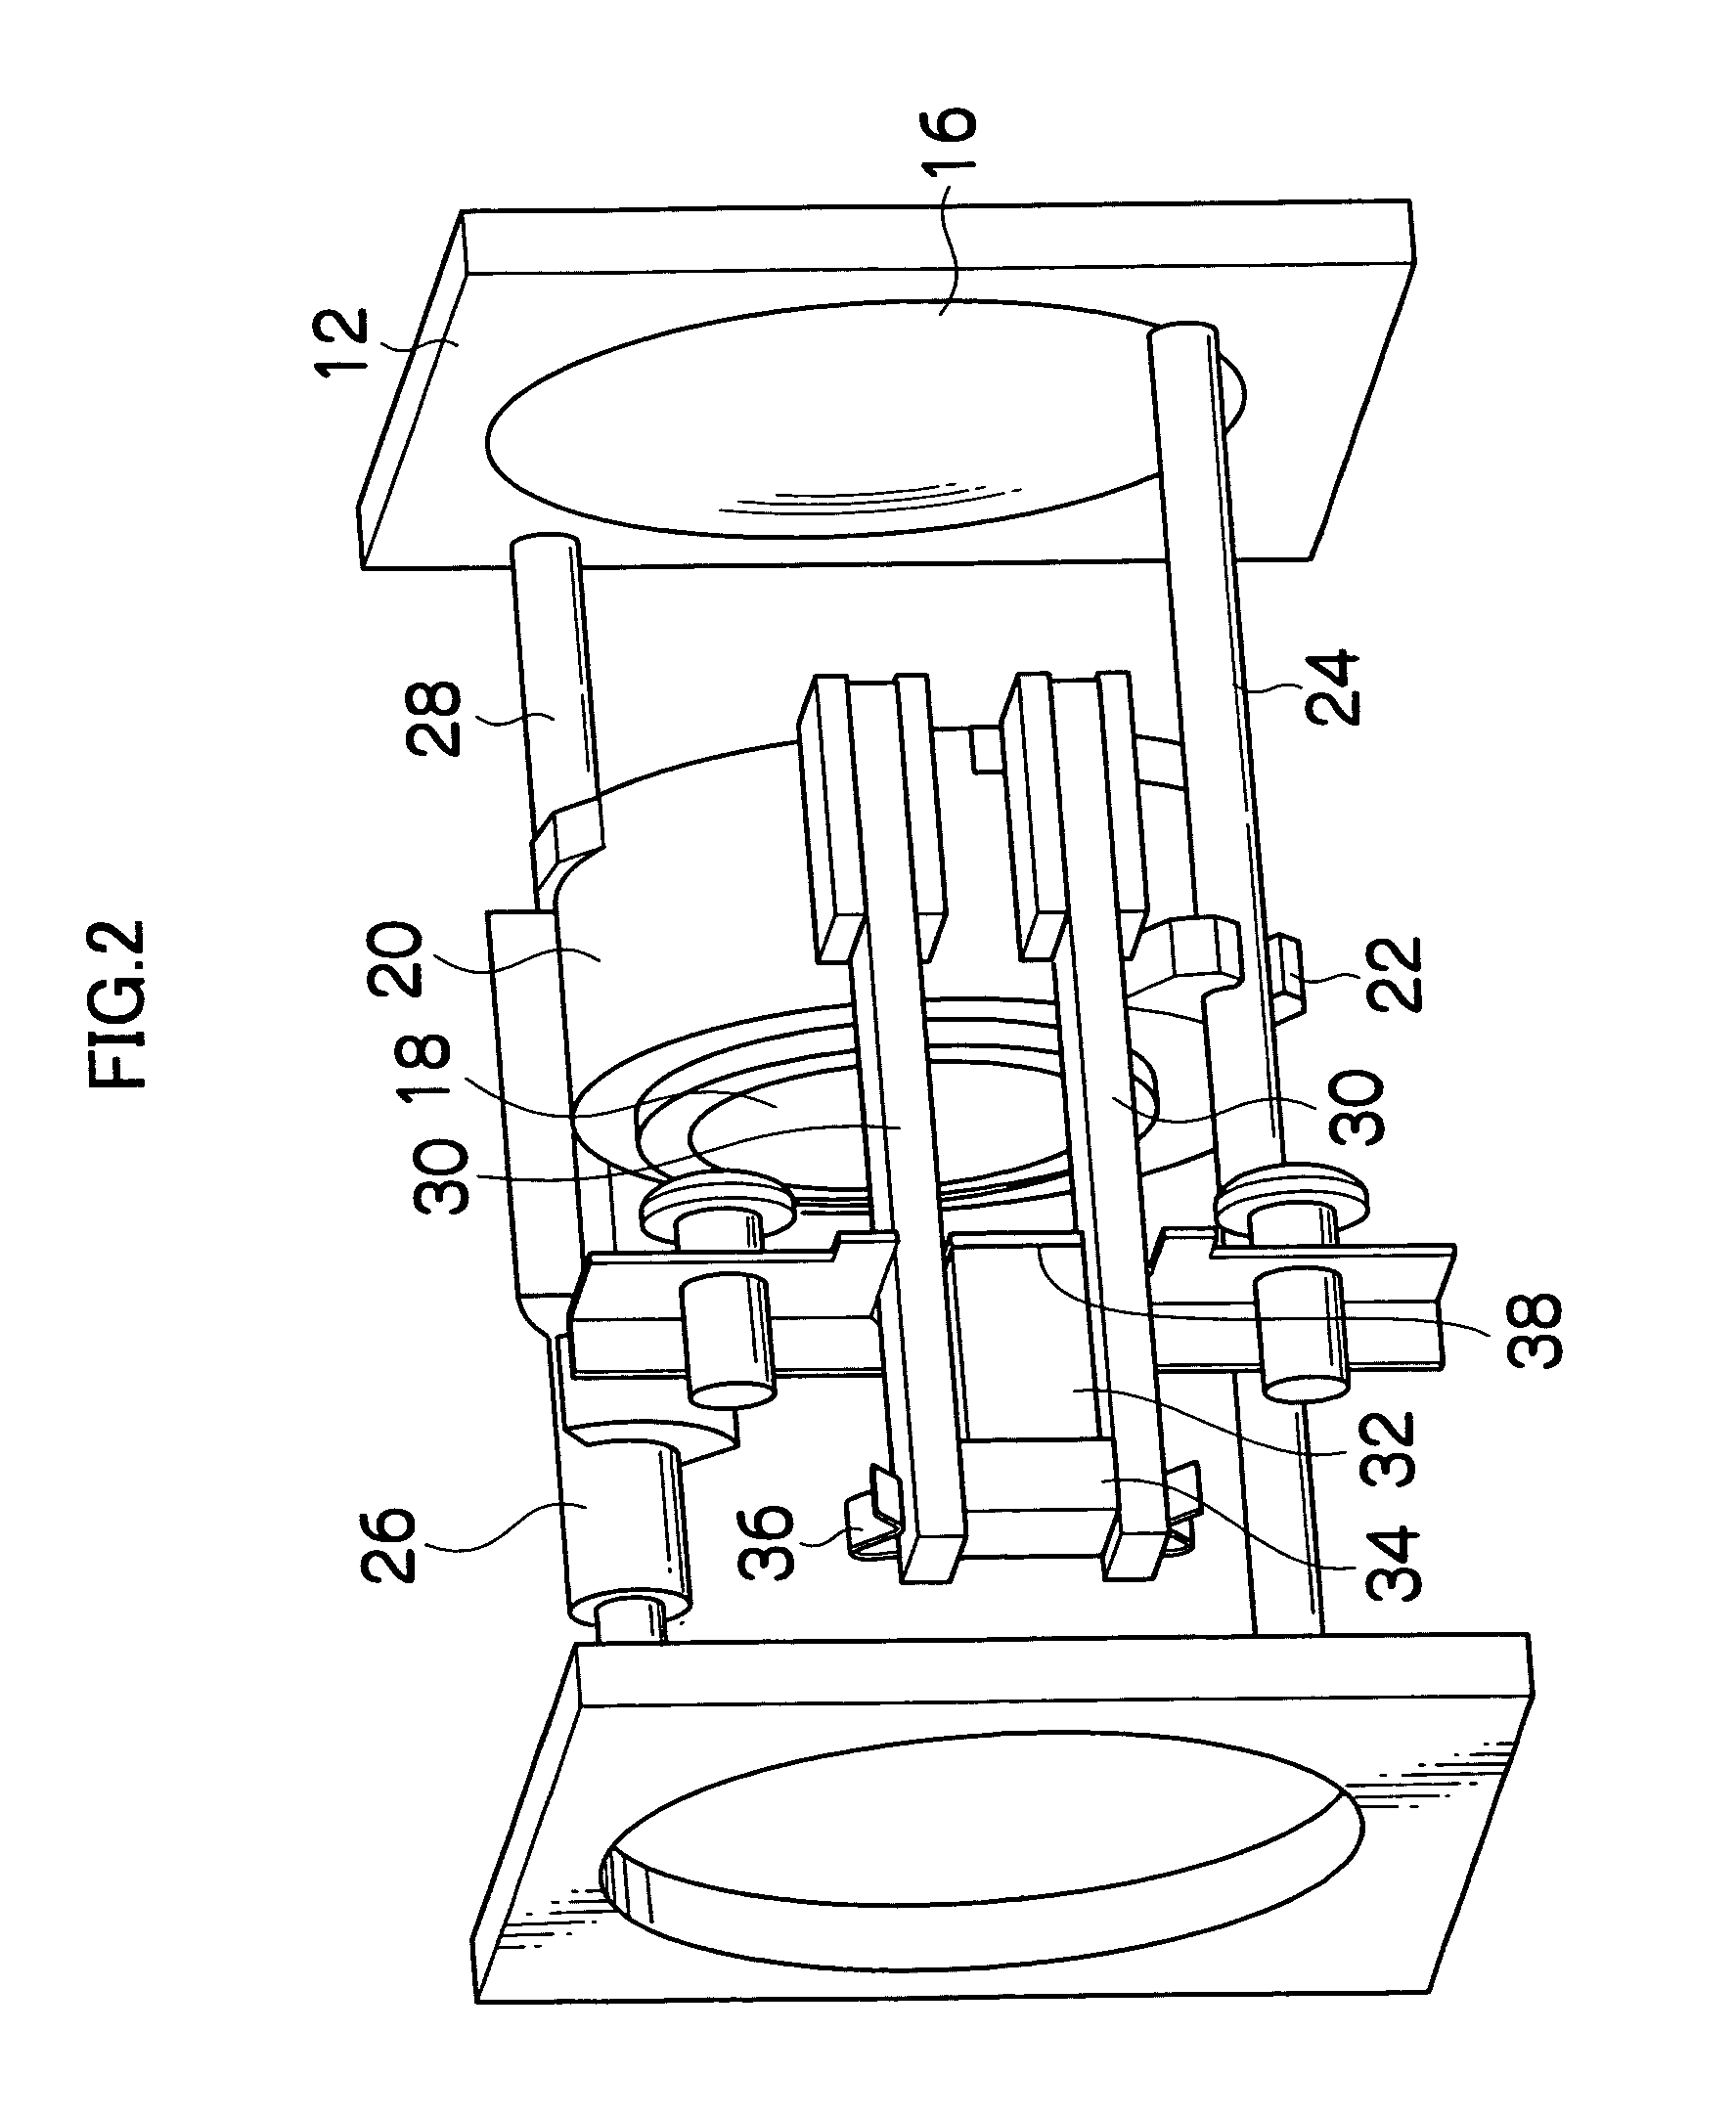 Piezoelectric actuator for driving lens